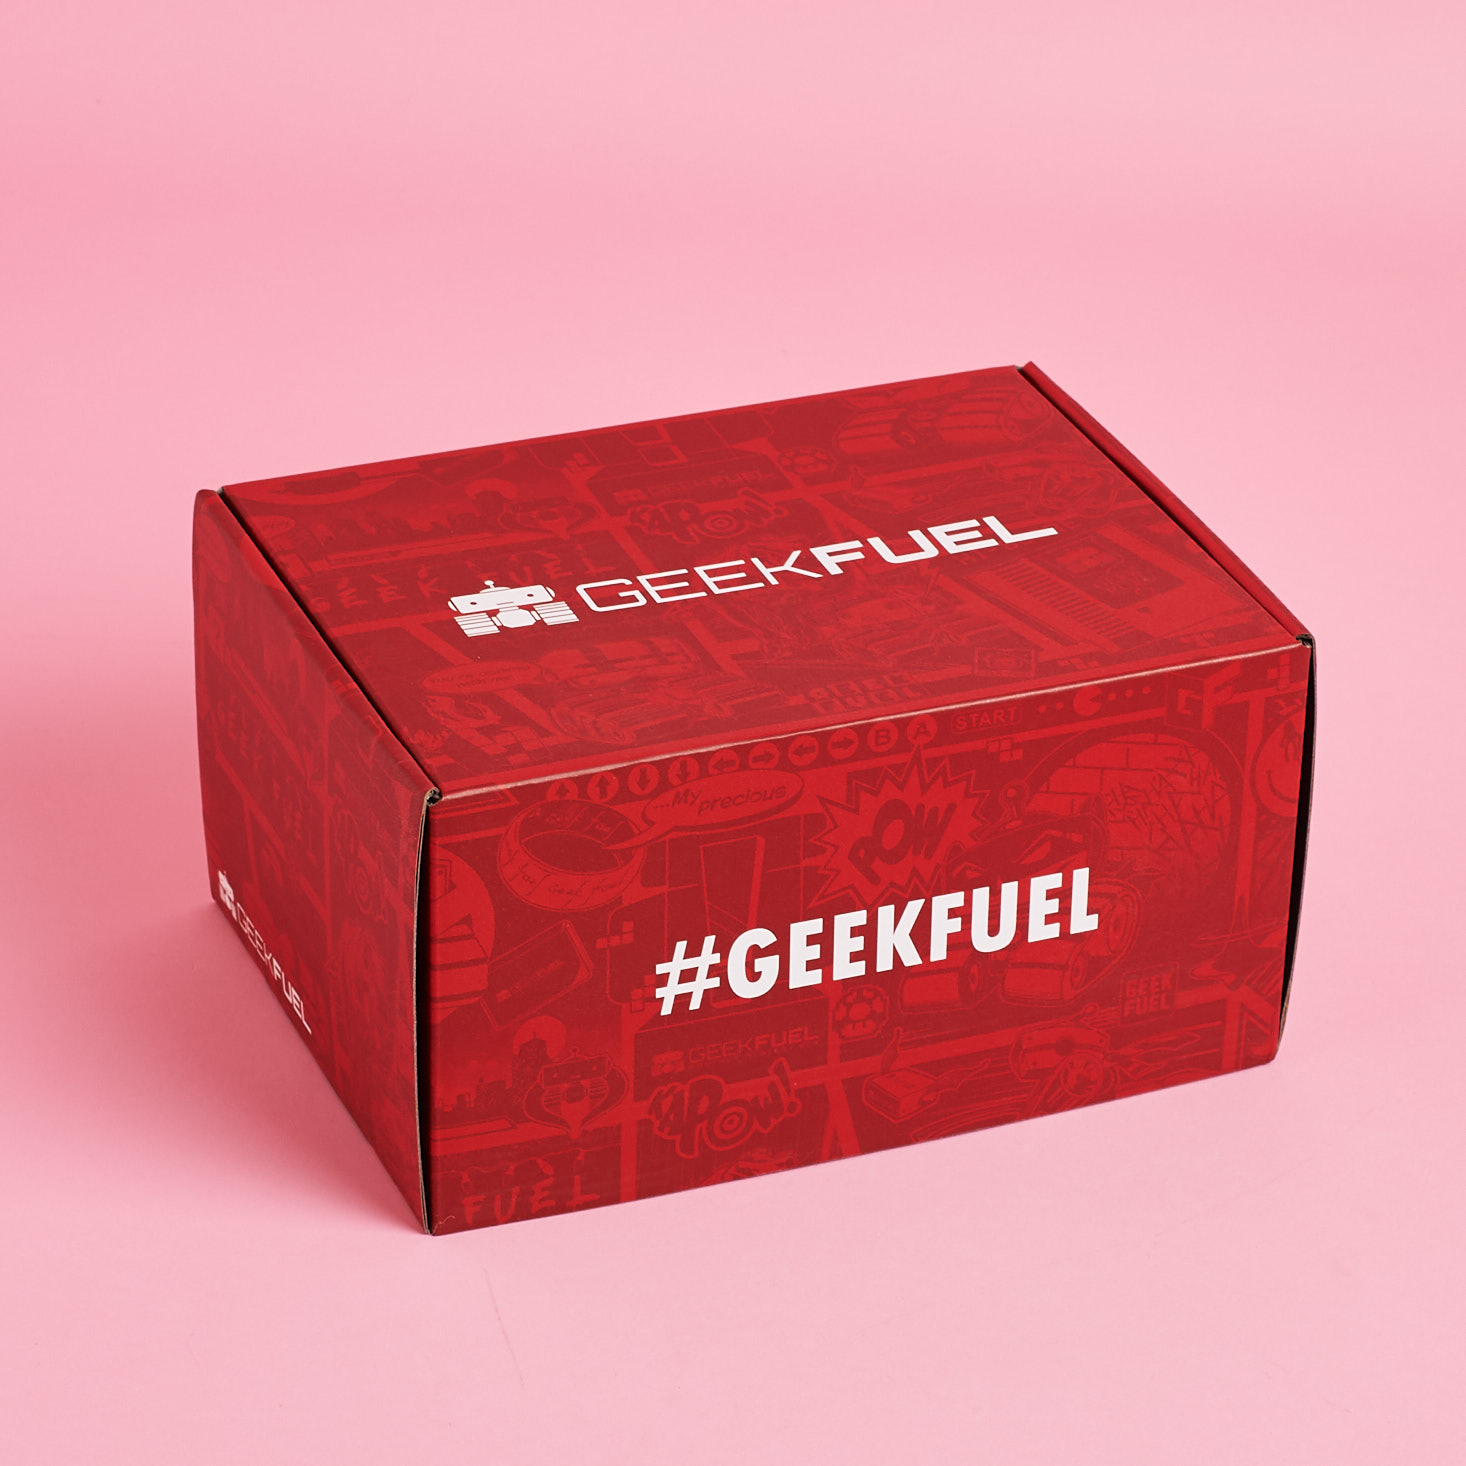 Geek Fuel Subscription Box Review + Black Friday Deal – November 2017